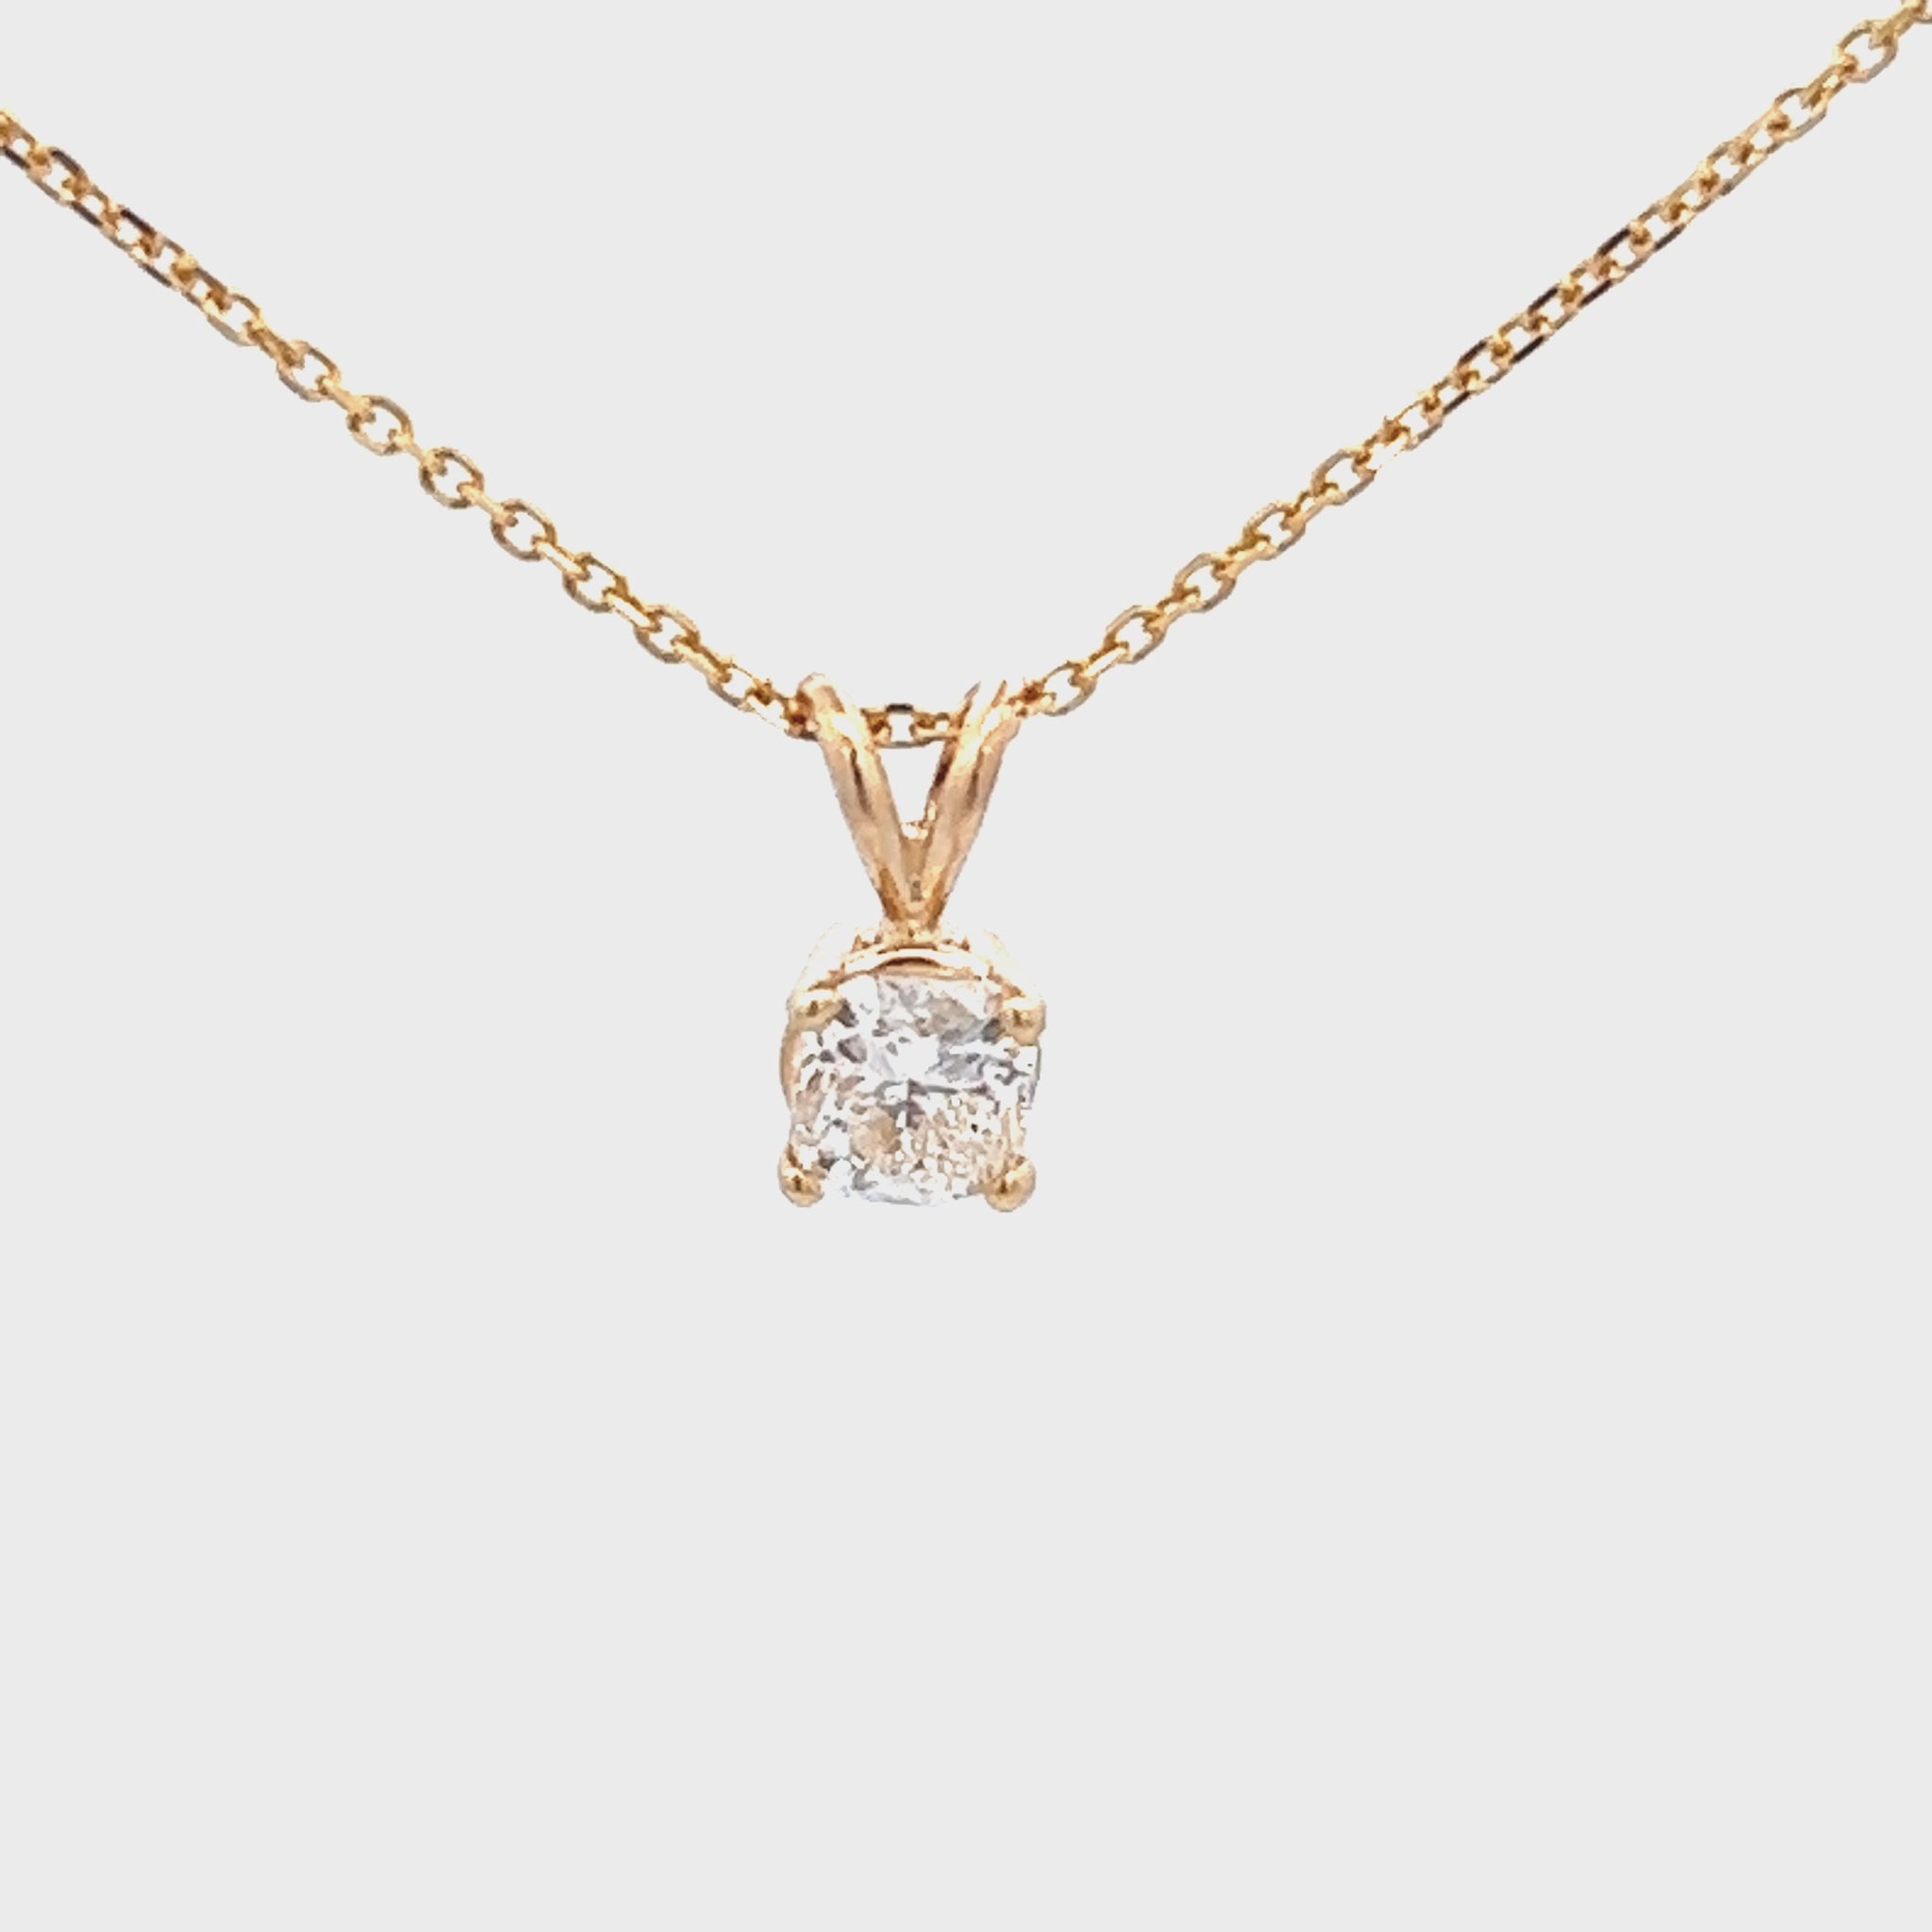 .71ct Cushion Cut Diamond Pendant Necklace 14K Yellow Gold Chain Video